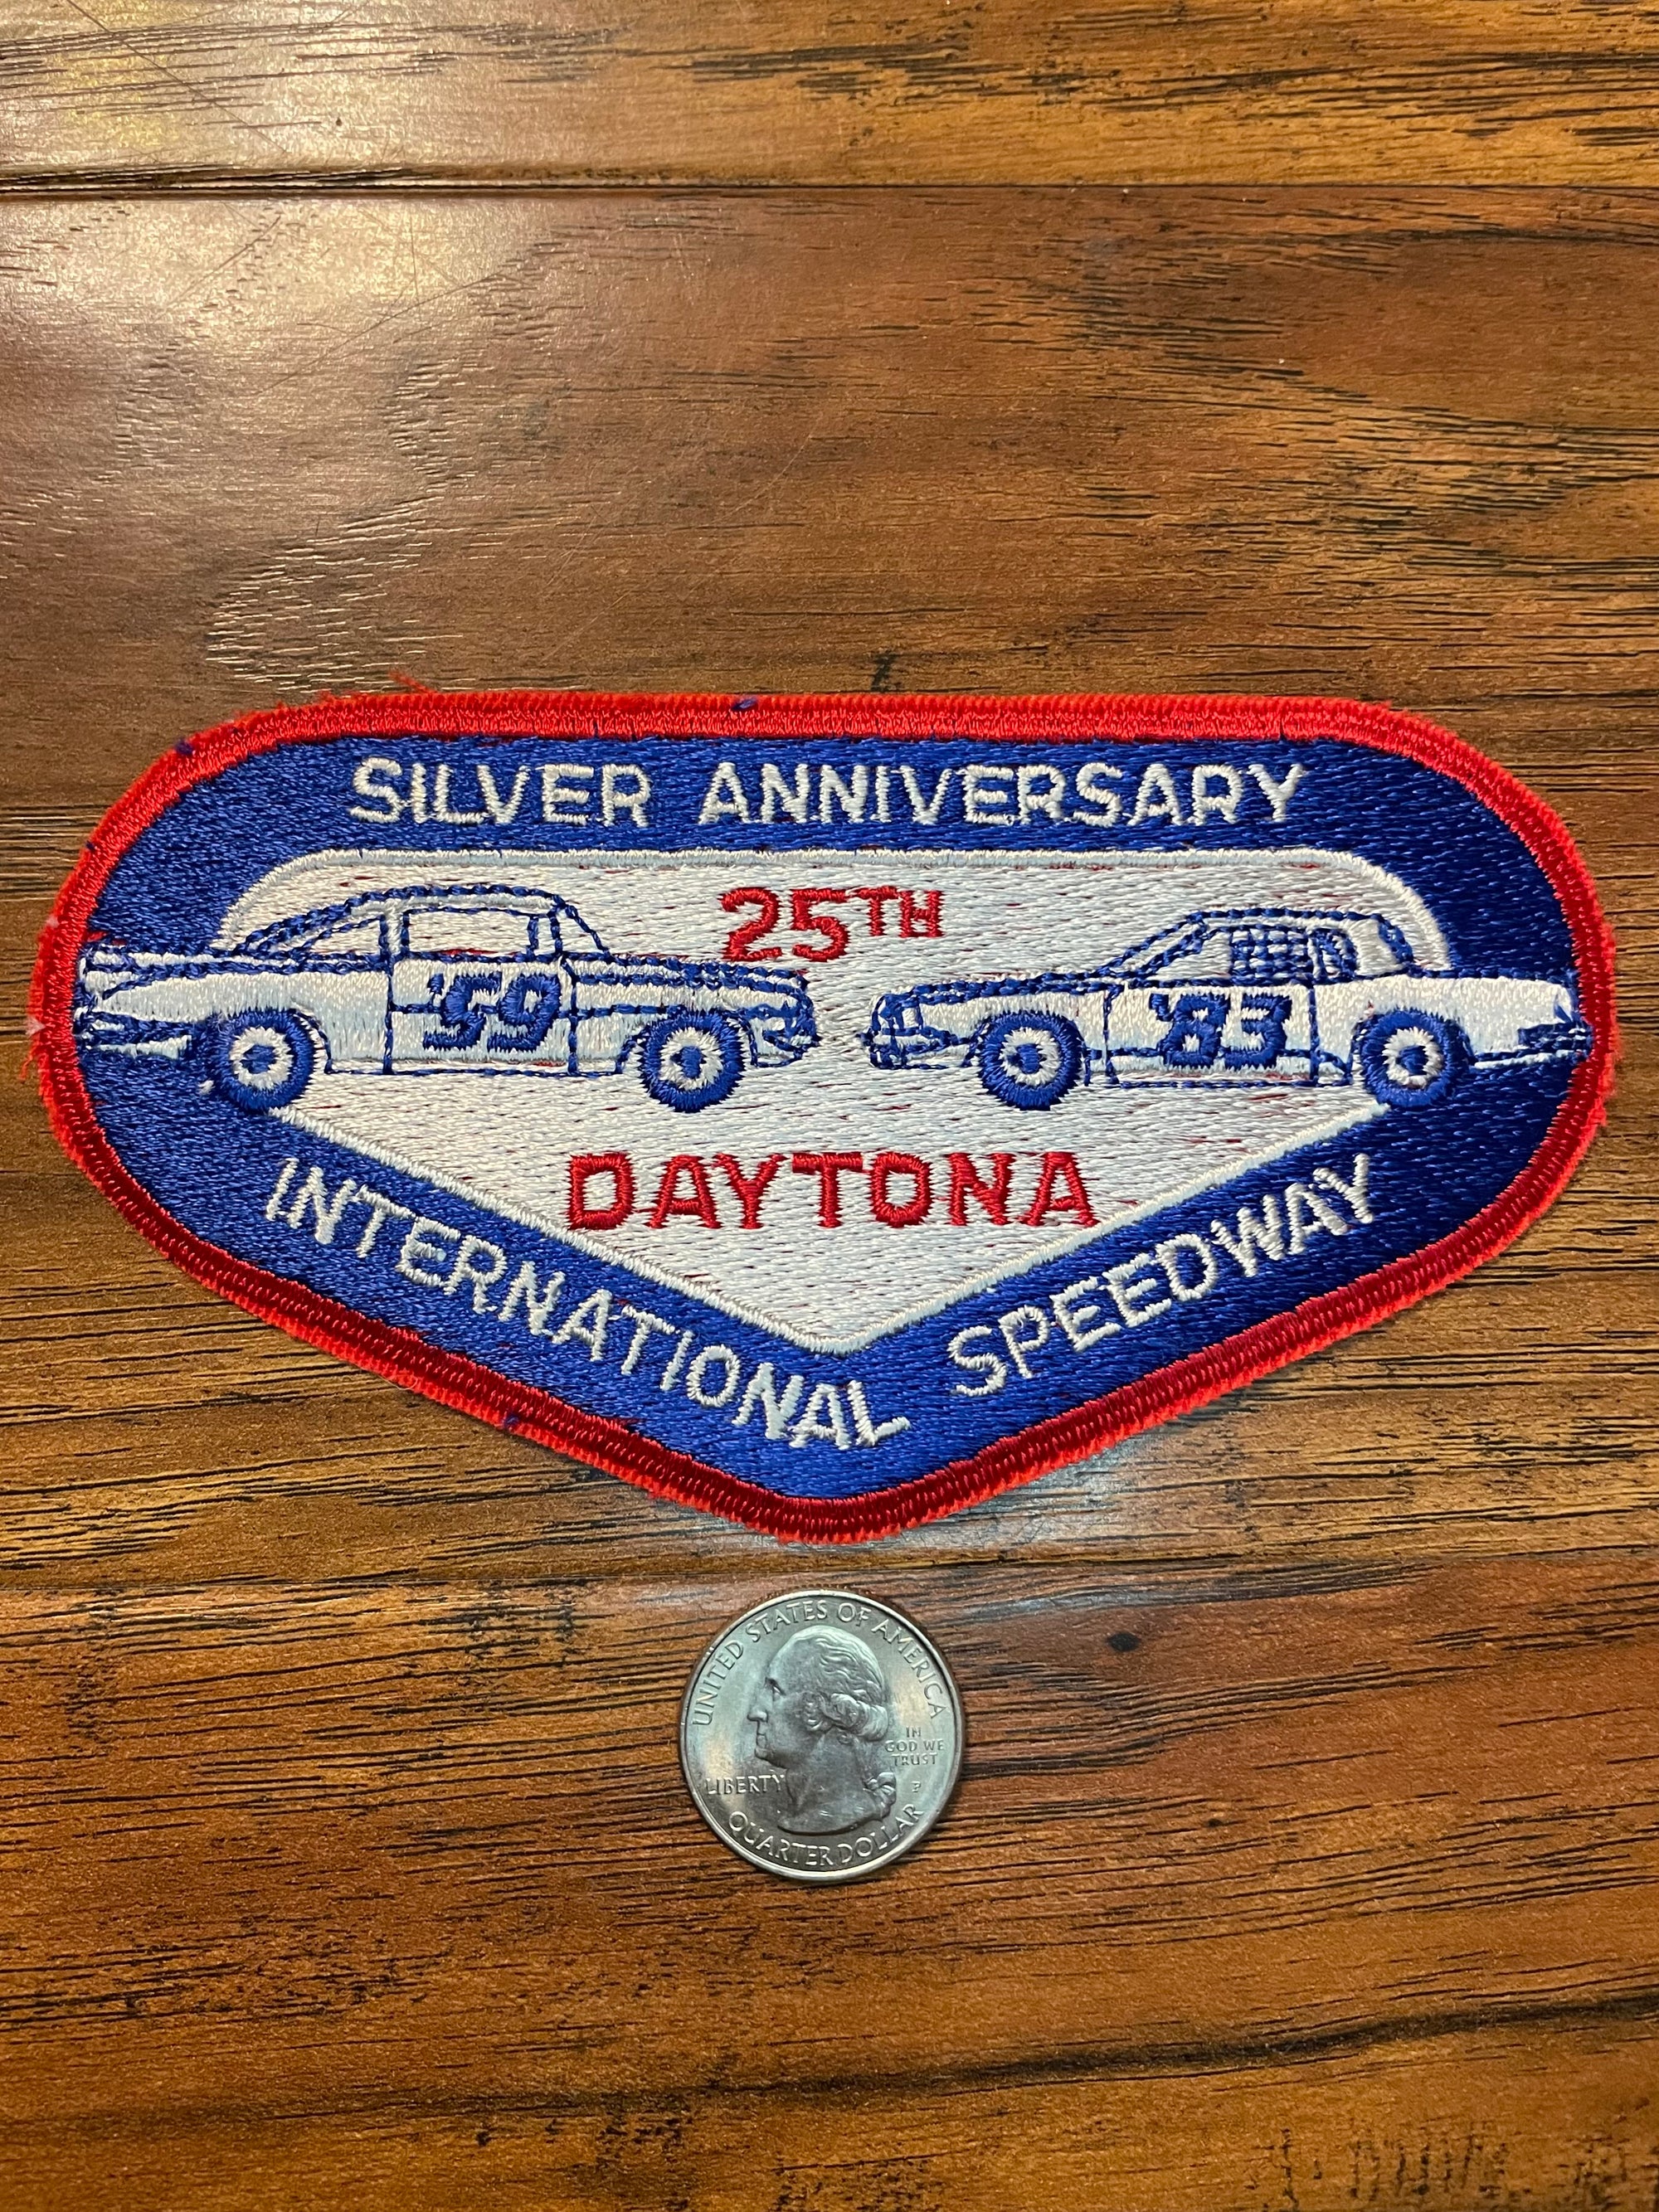 Vintage Silver Anniversary International Speedway - 25th Daytona